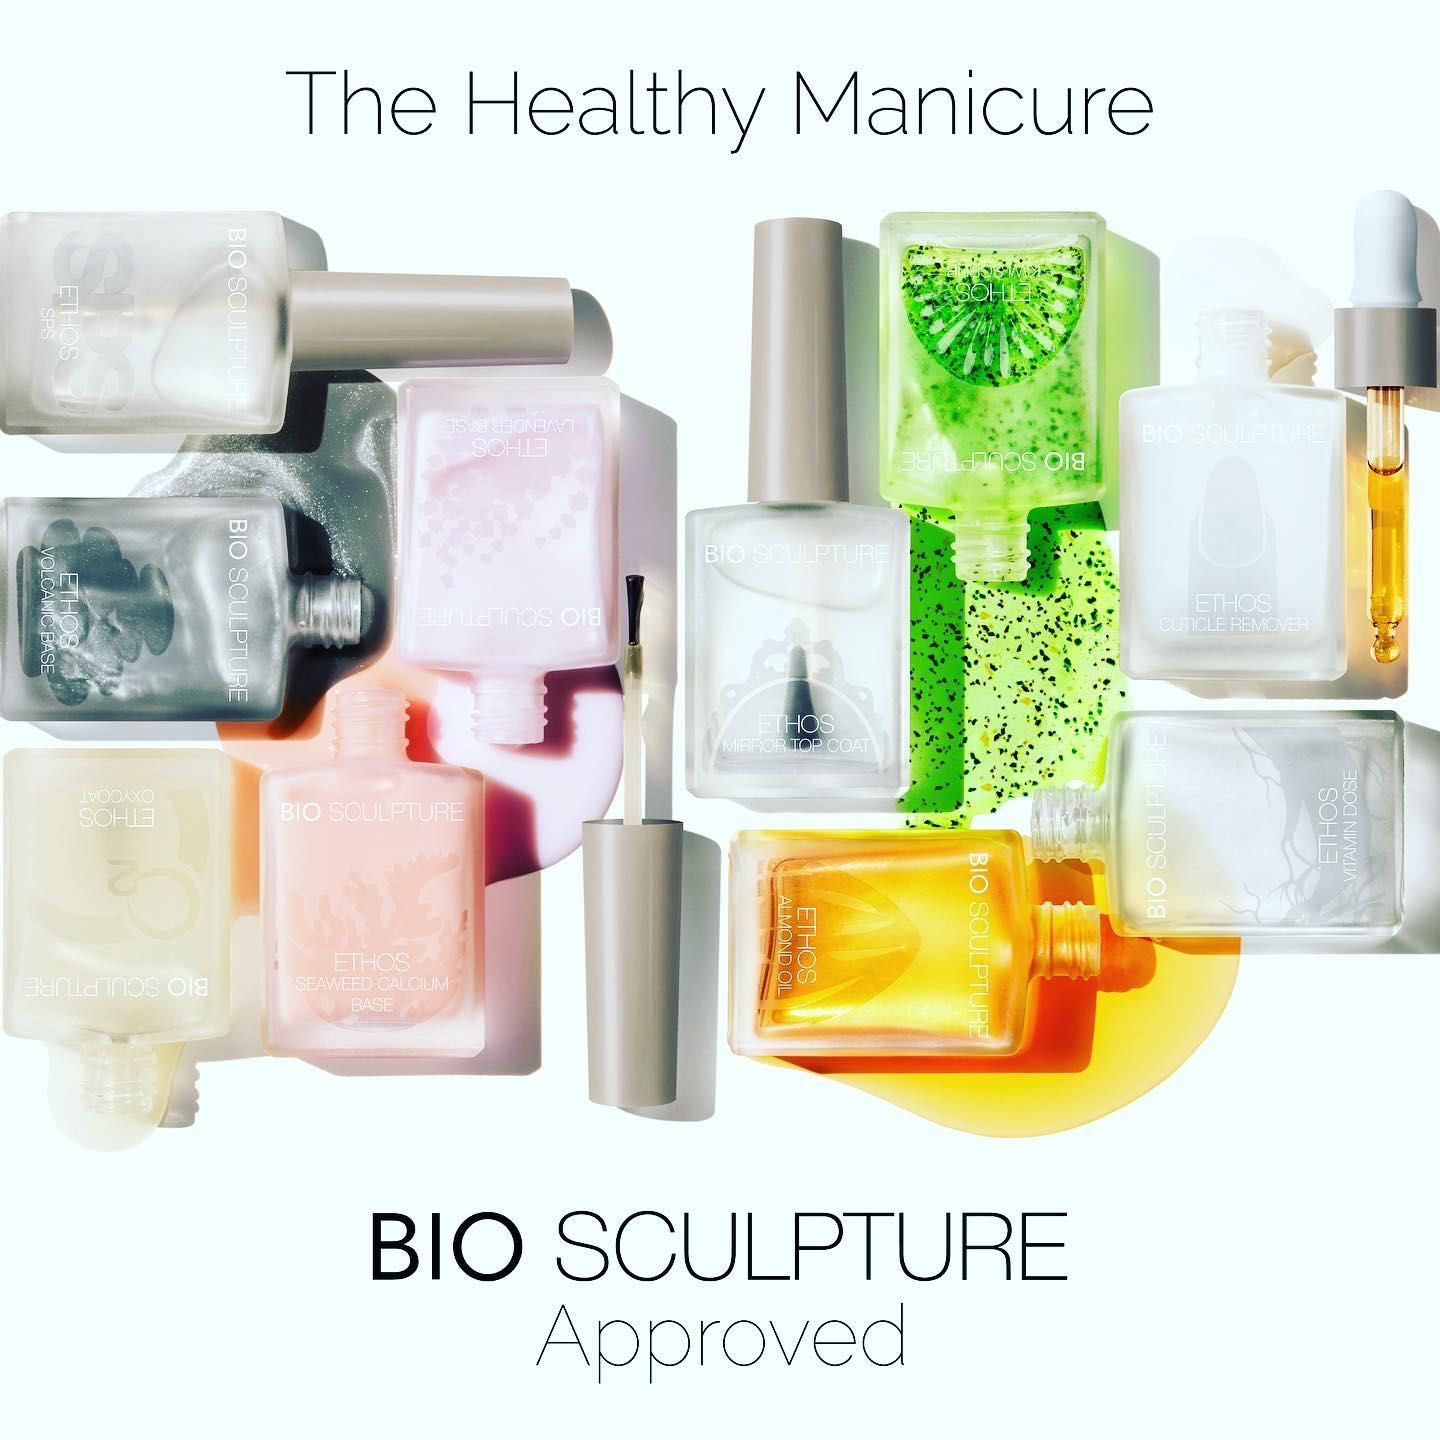 Bio sculpture manicure portfolio